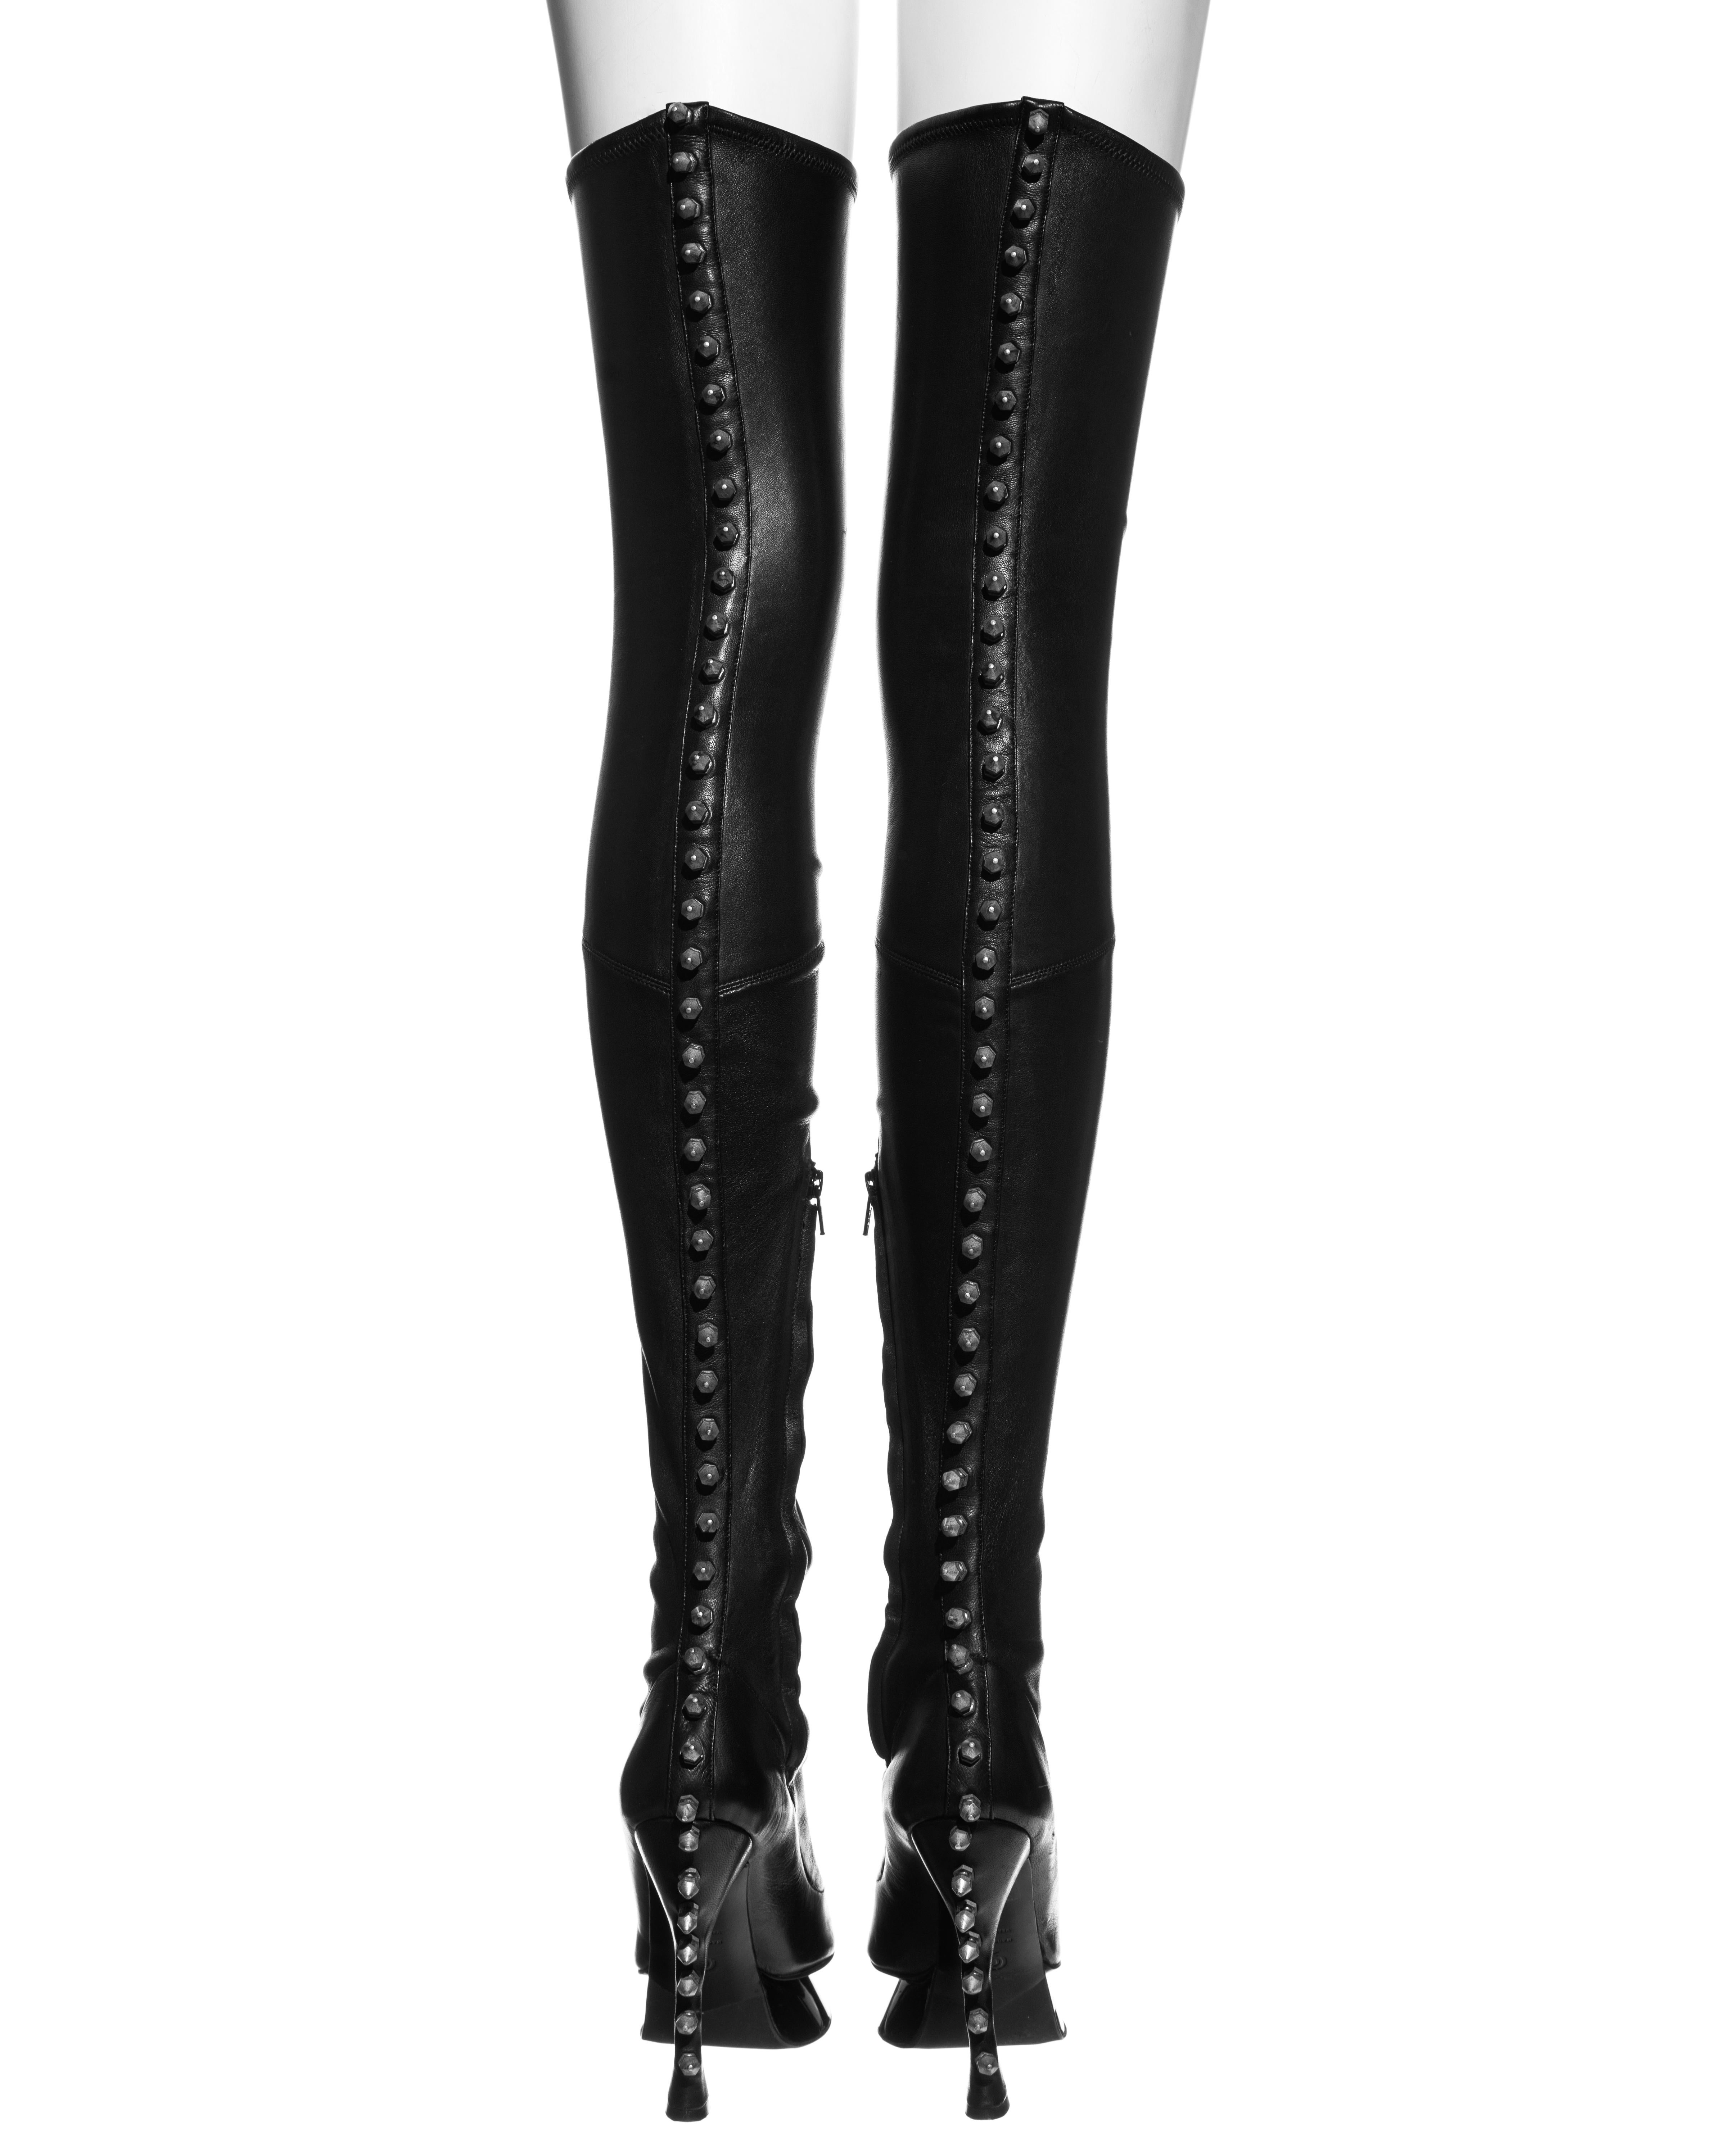 Alexander McQueen black studded leather thigh-high platform boots, fw 2009 4